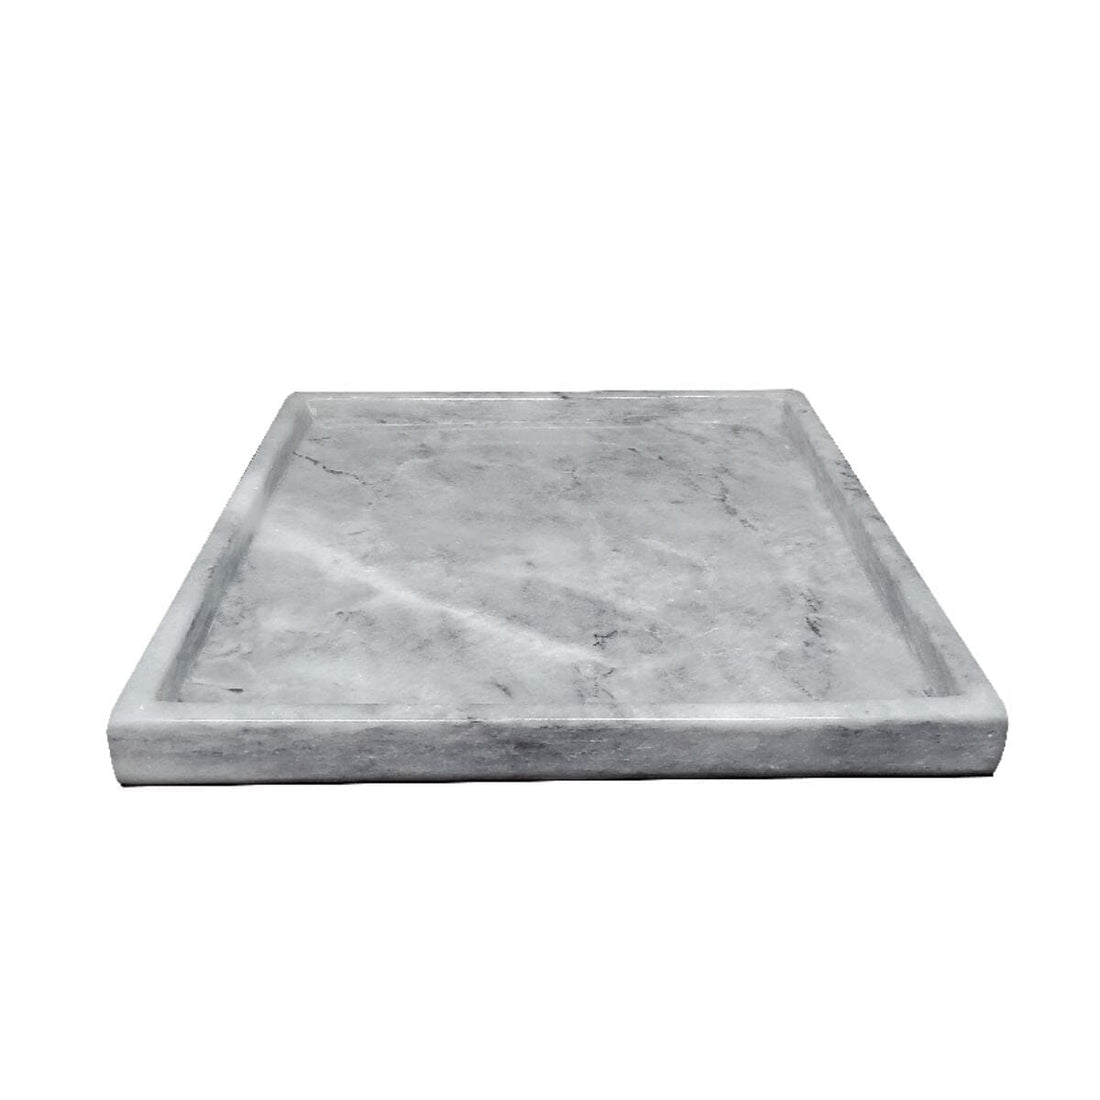 HairMNL Marble Supply Square Marble Bath Tray 8x8" Gray 